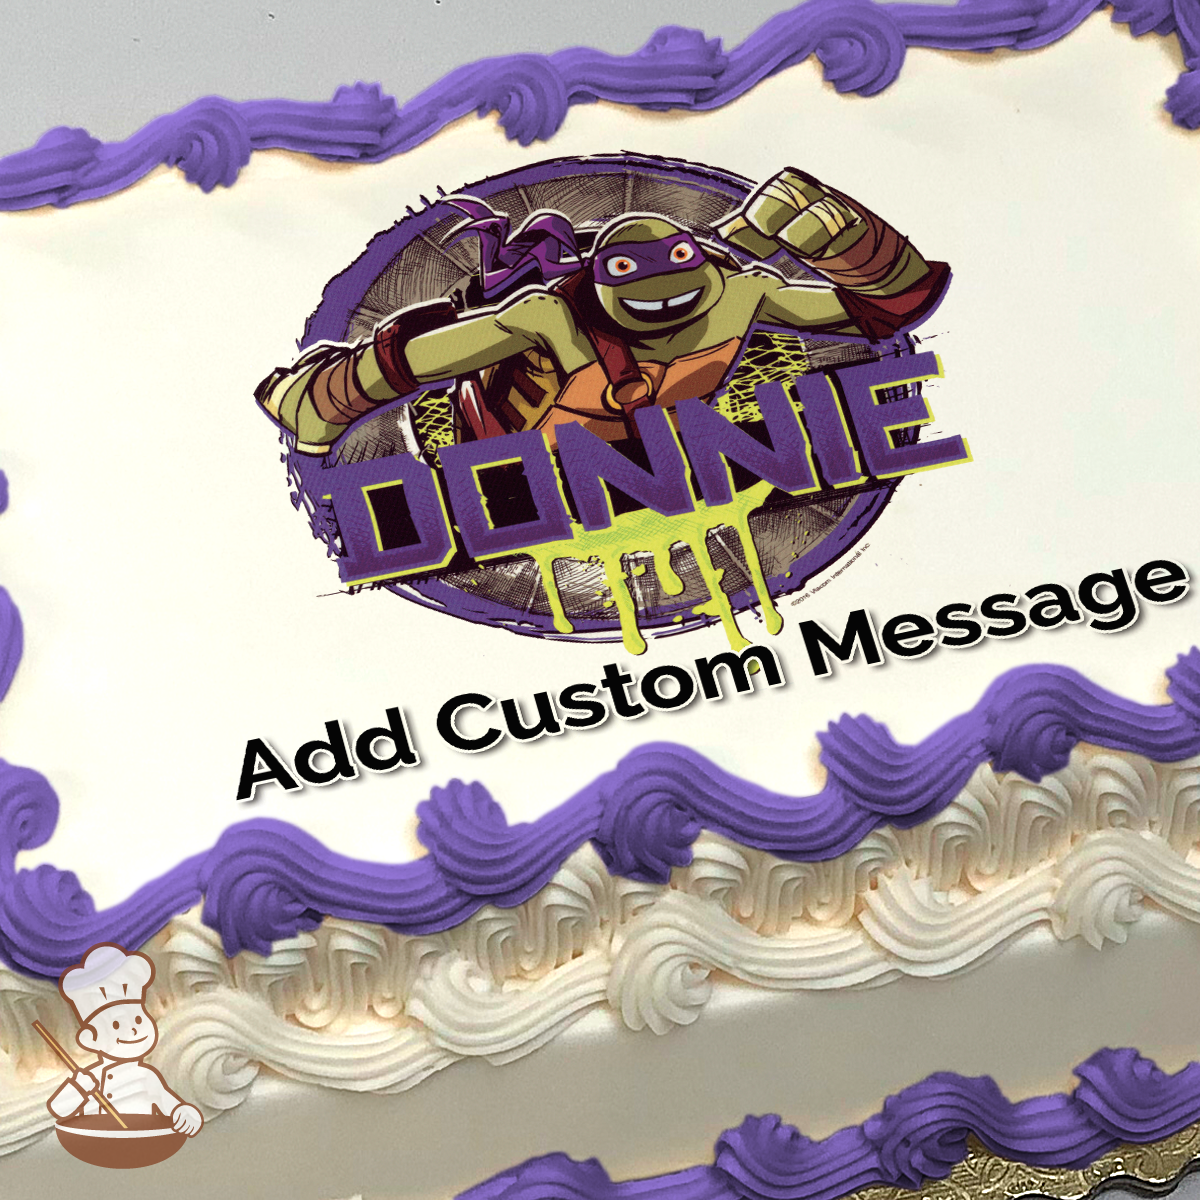 Ninja Turtles Birthday Cake